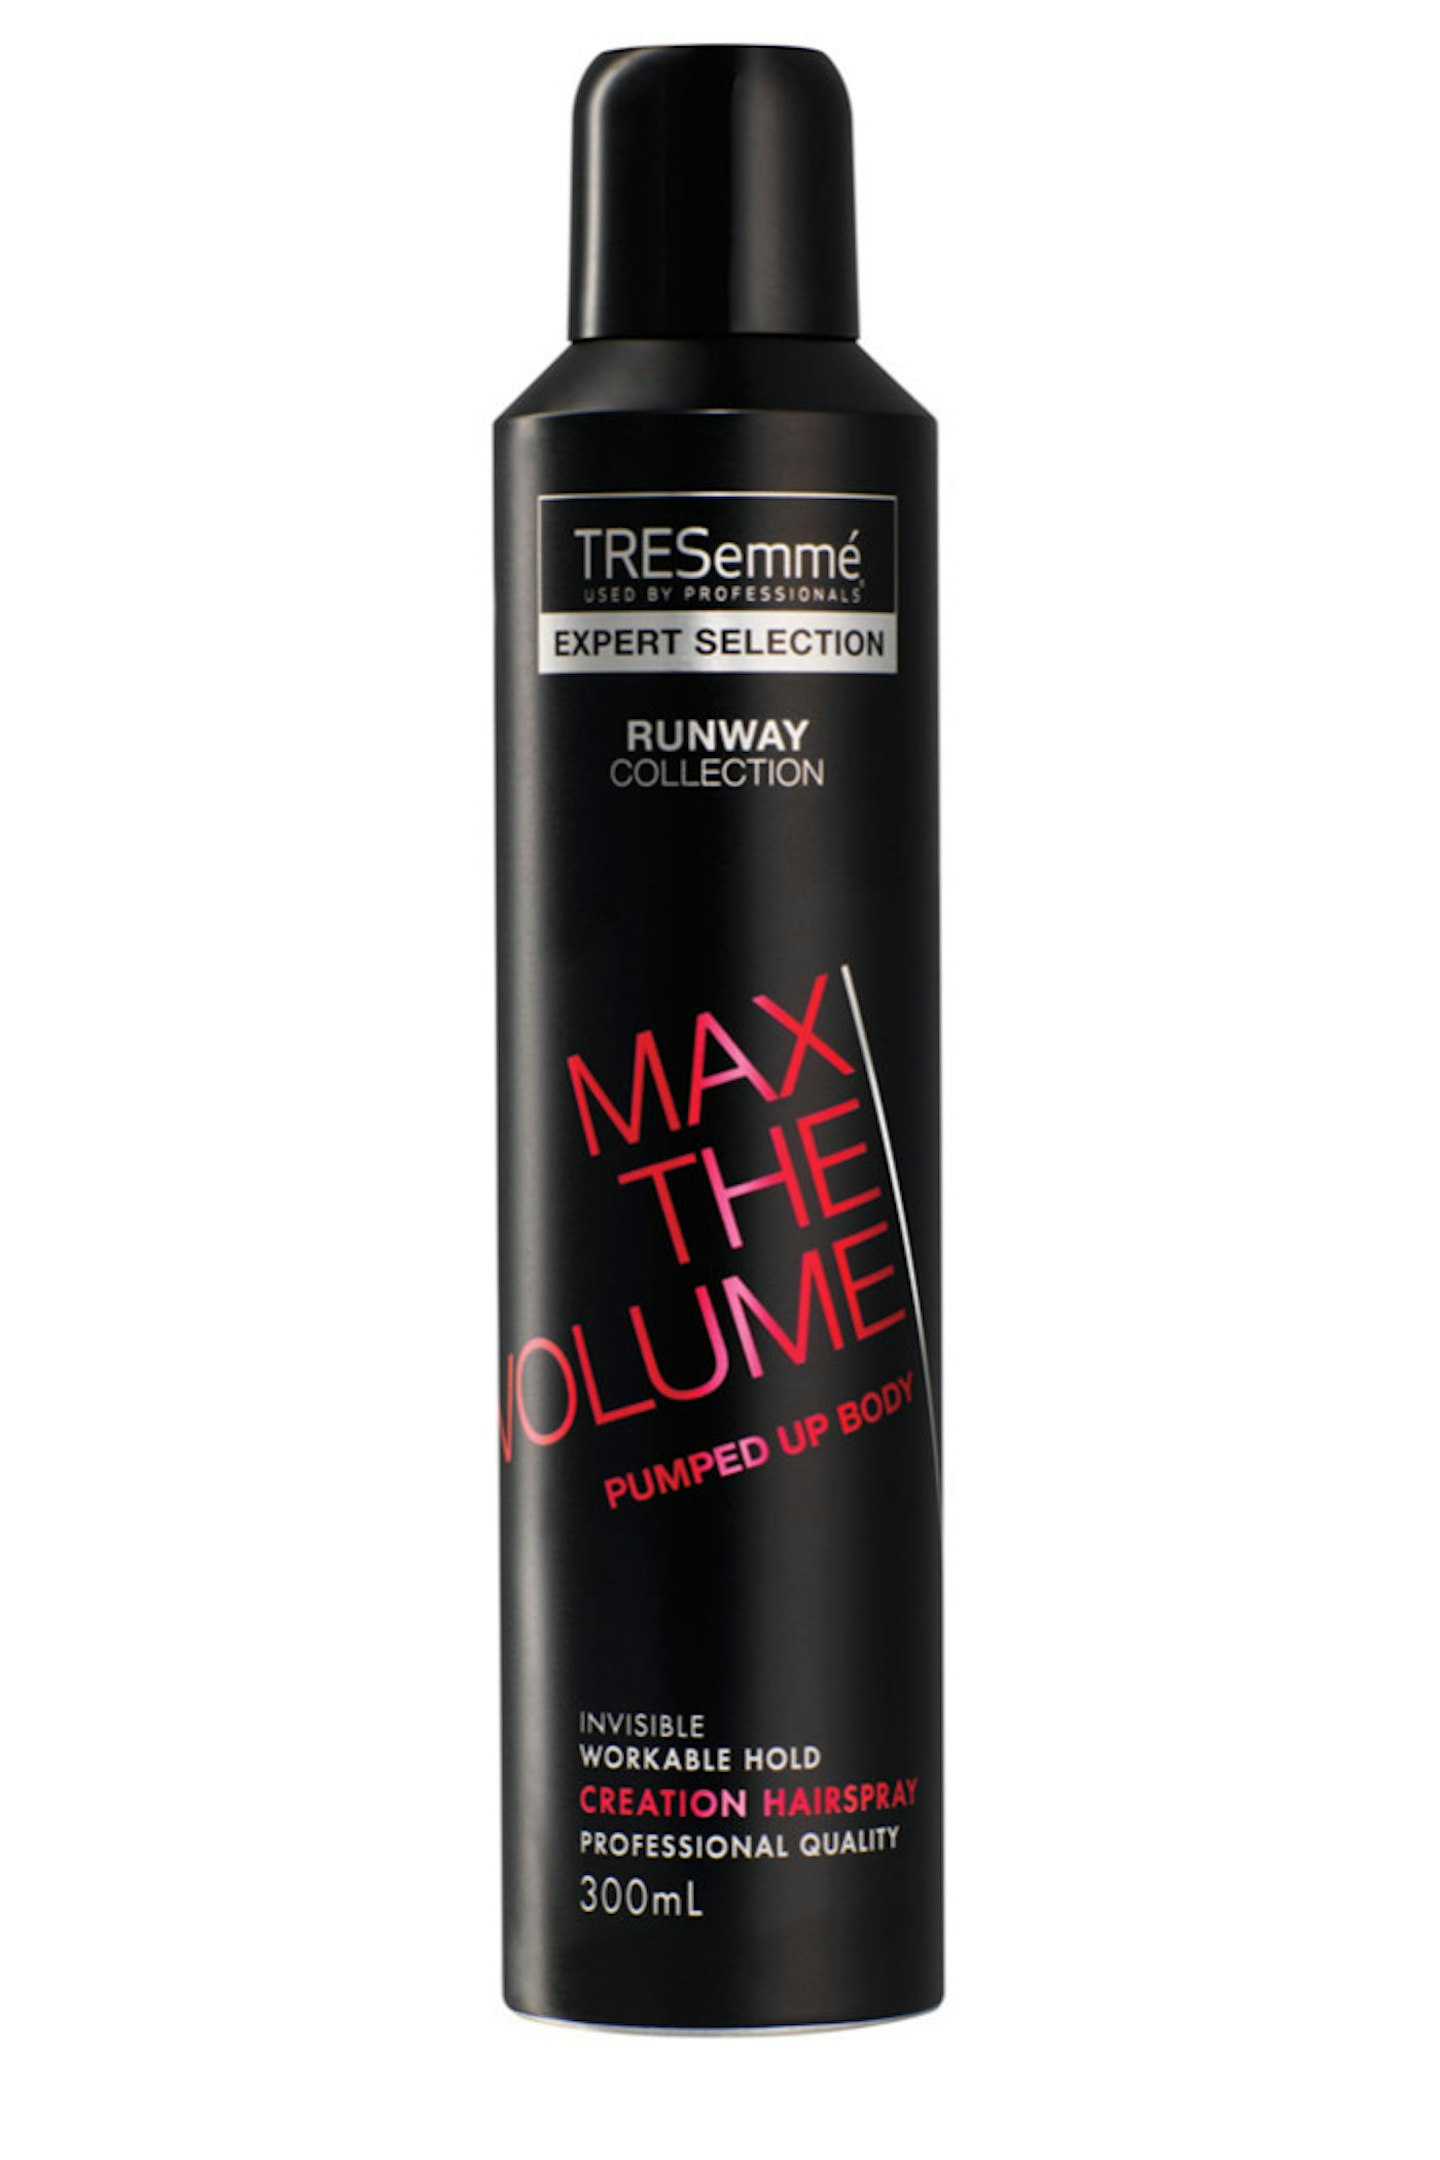 TRESemme Max The Volume Creation Hairspray, £5.99